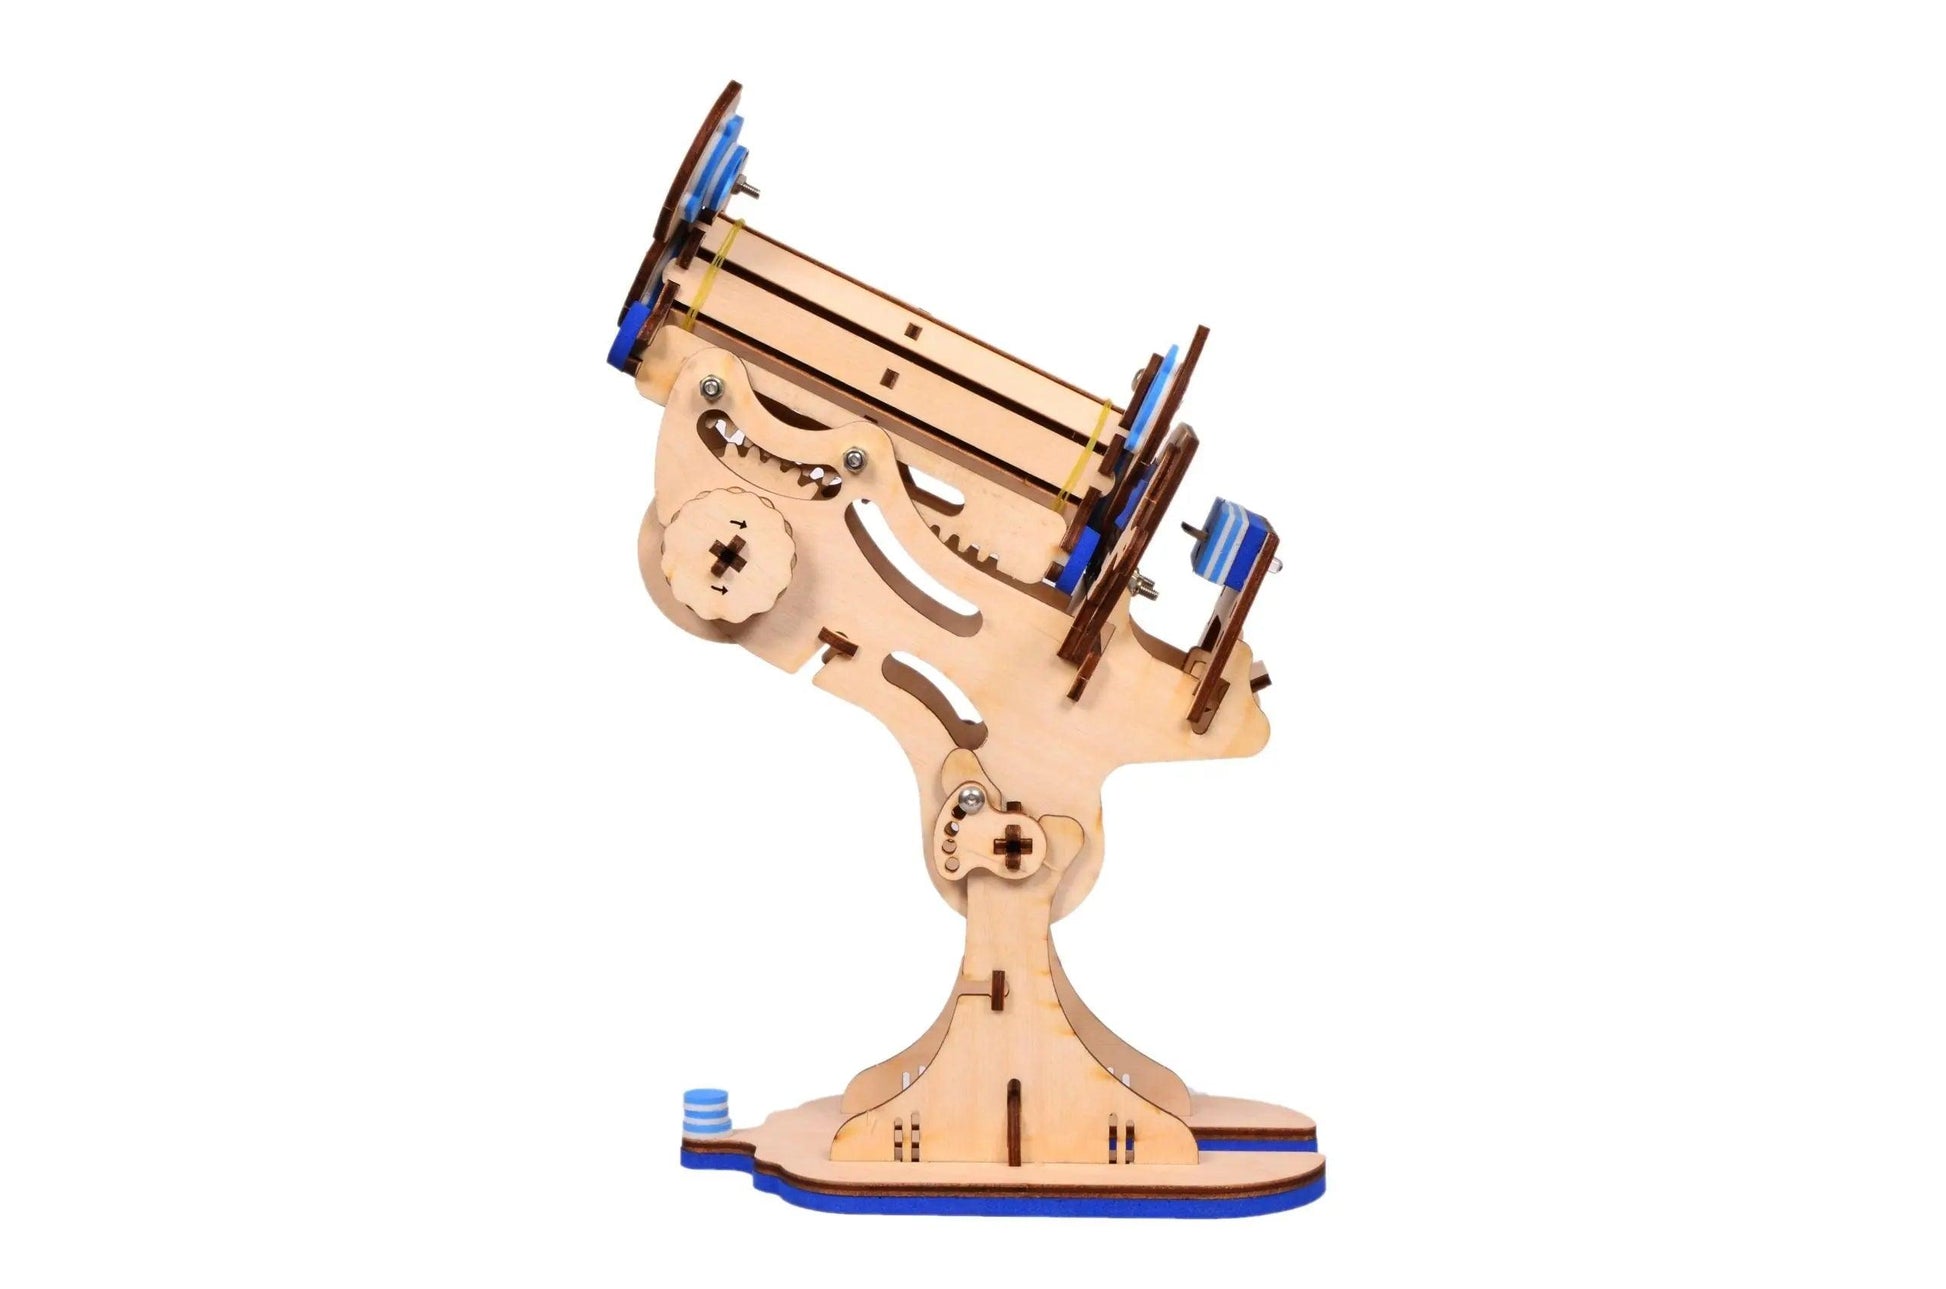 DIY Educational Wooden Microscope STEM Kit